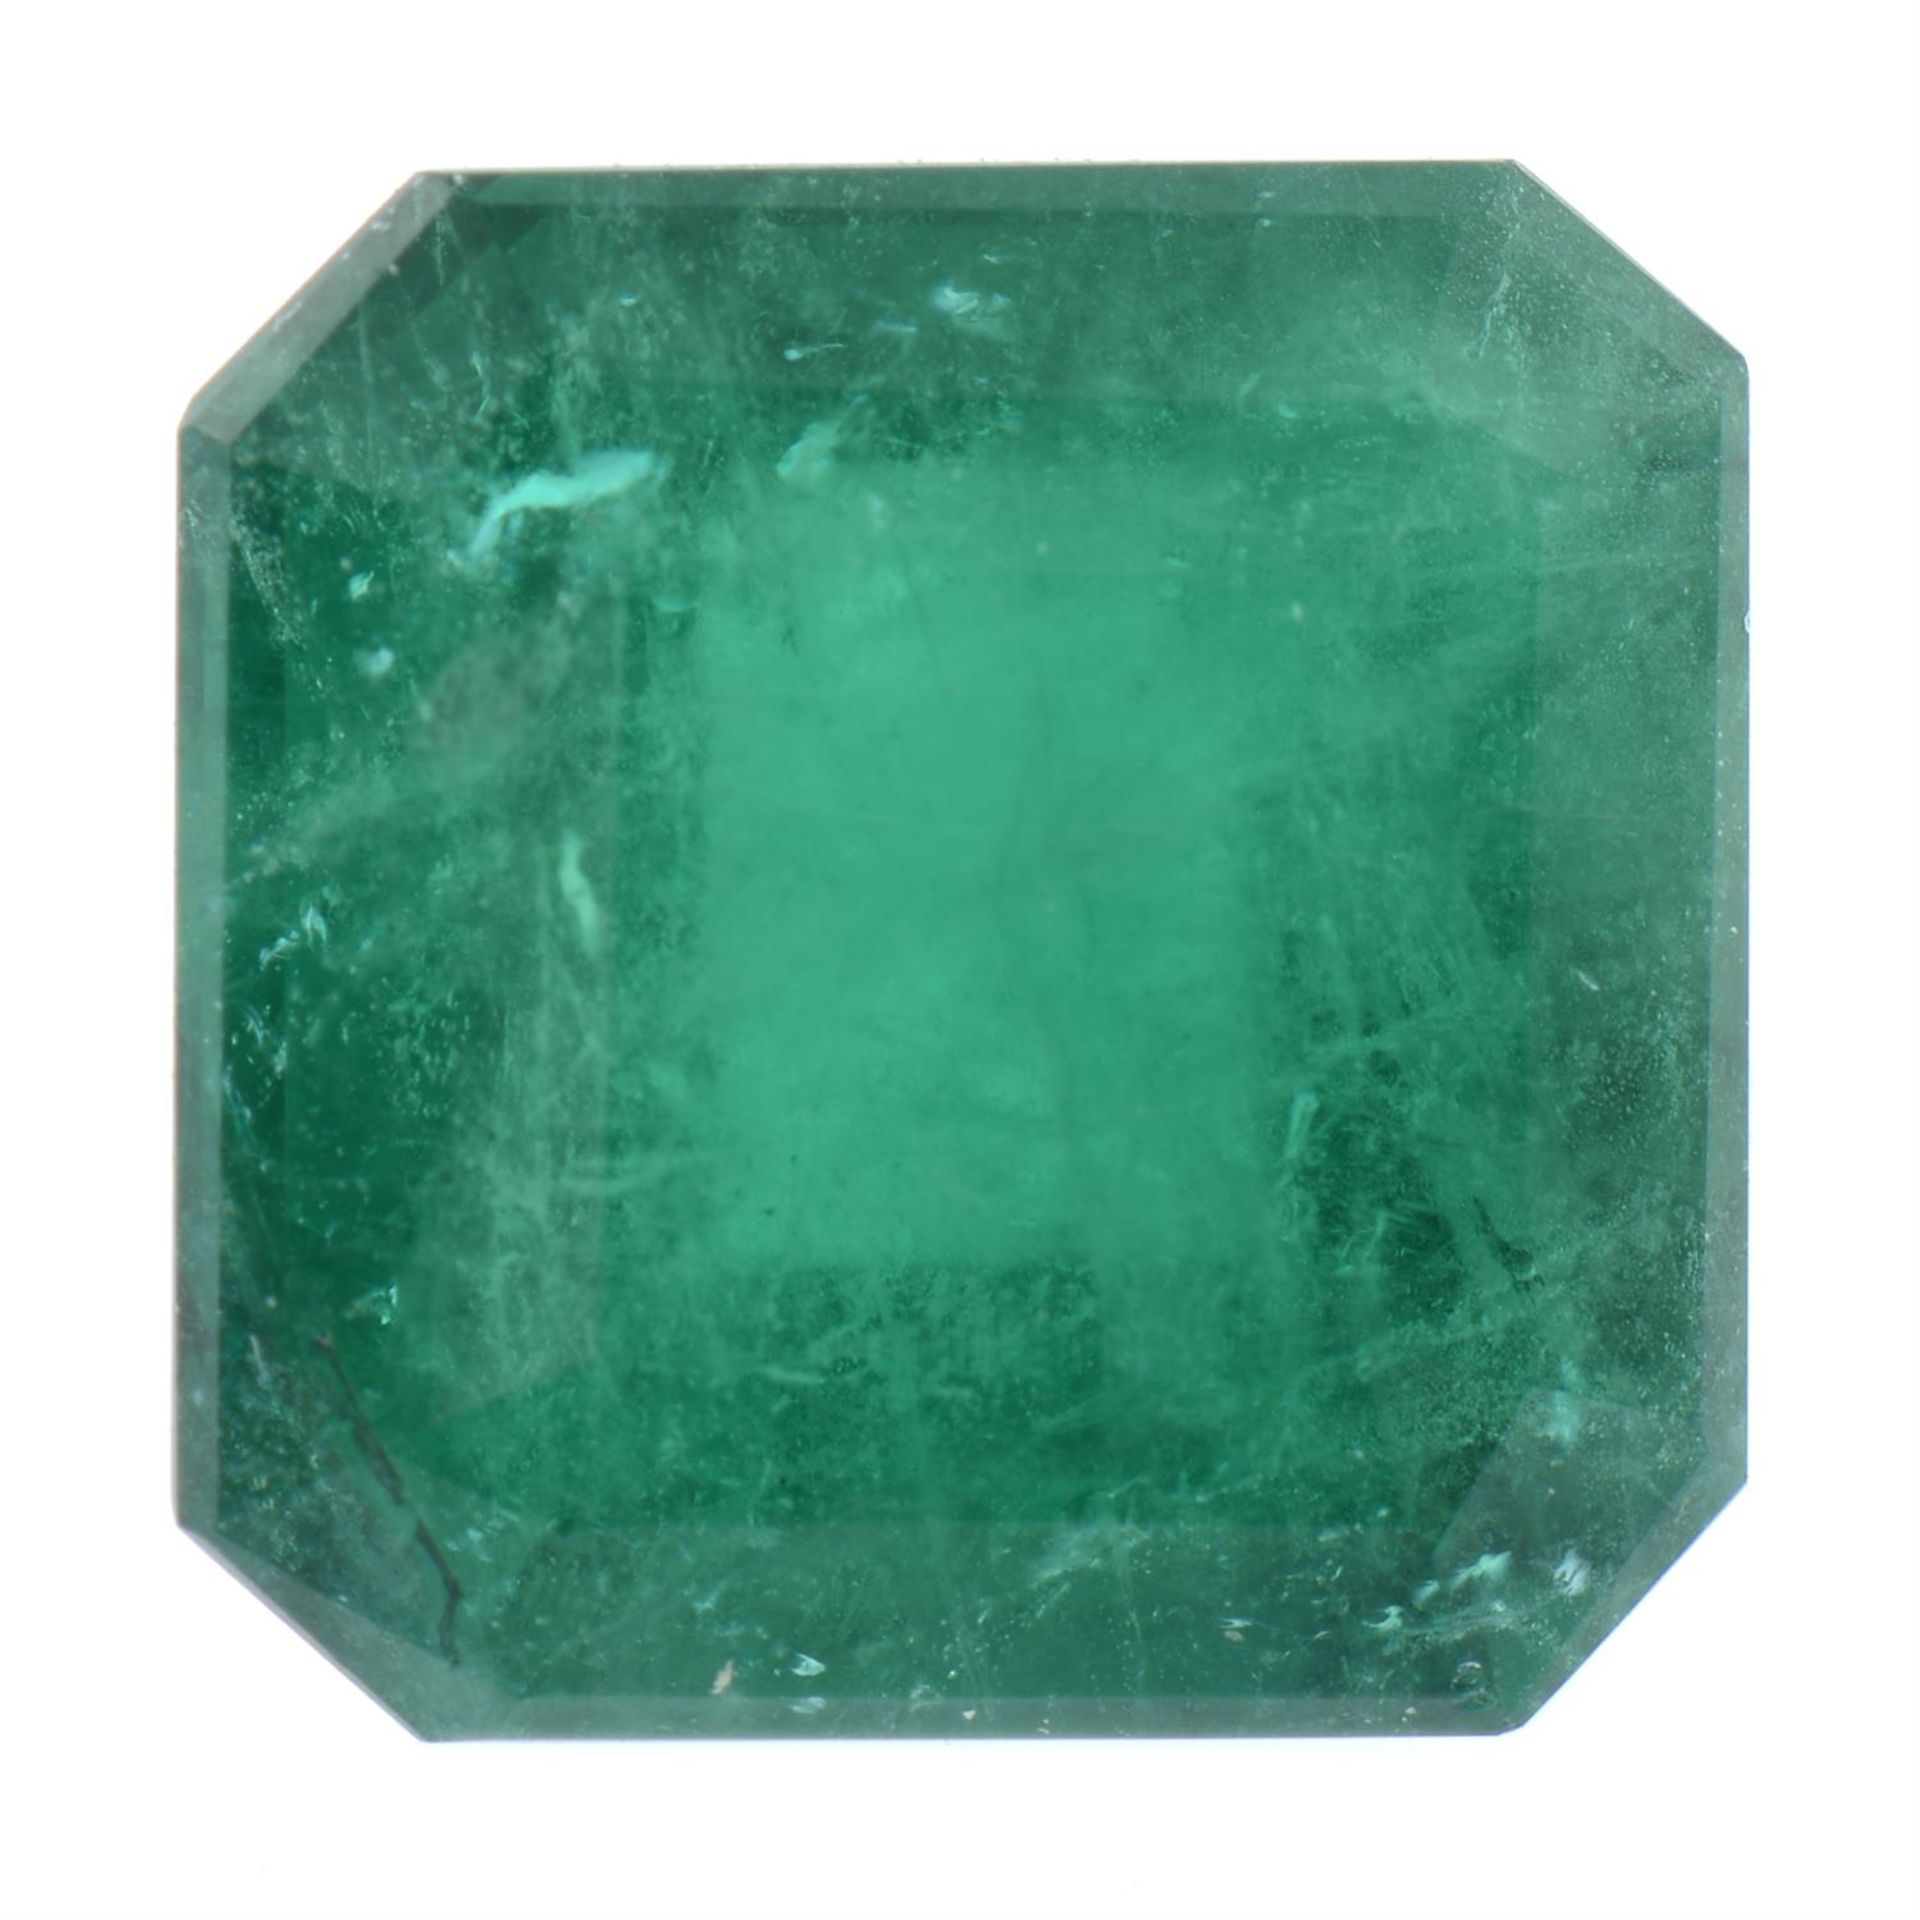 Square-shape emerald, 2.31ct